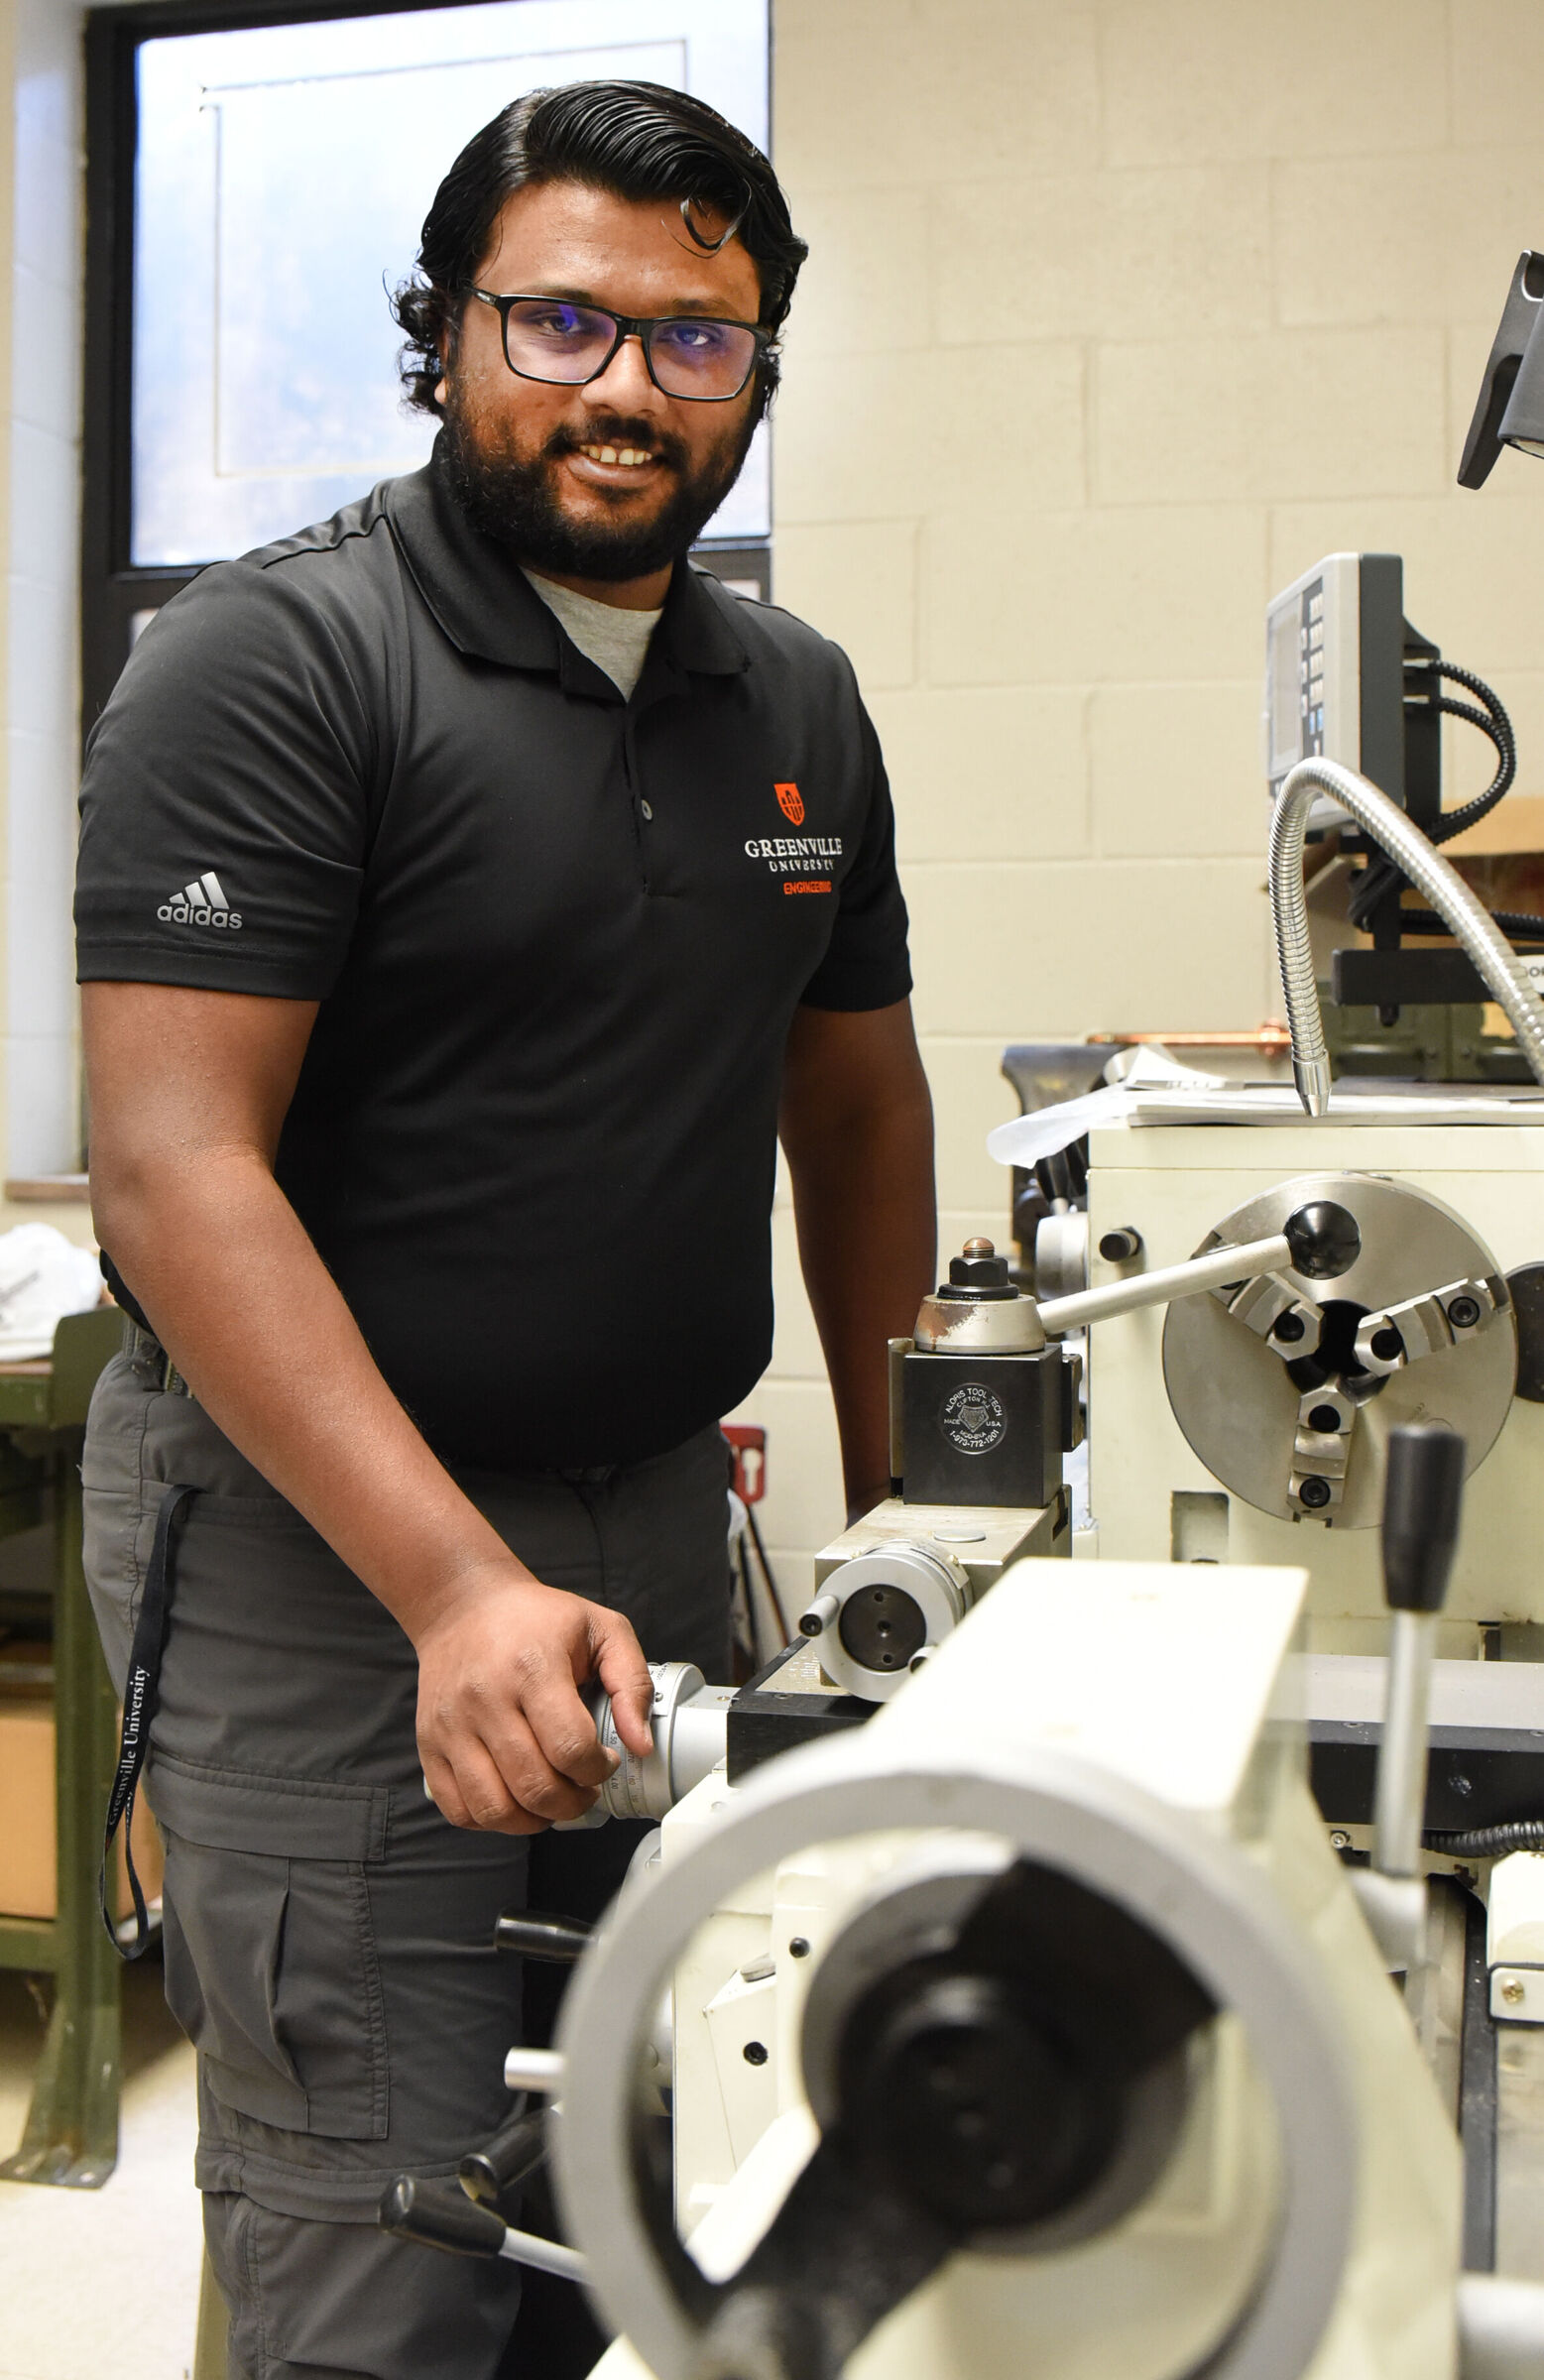 Professor Raja excited to help expand GU's engineering program